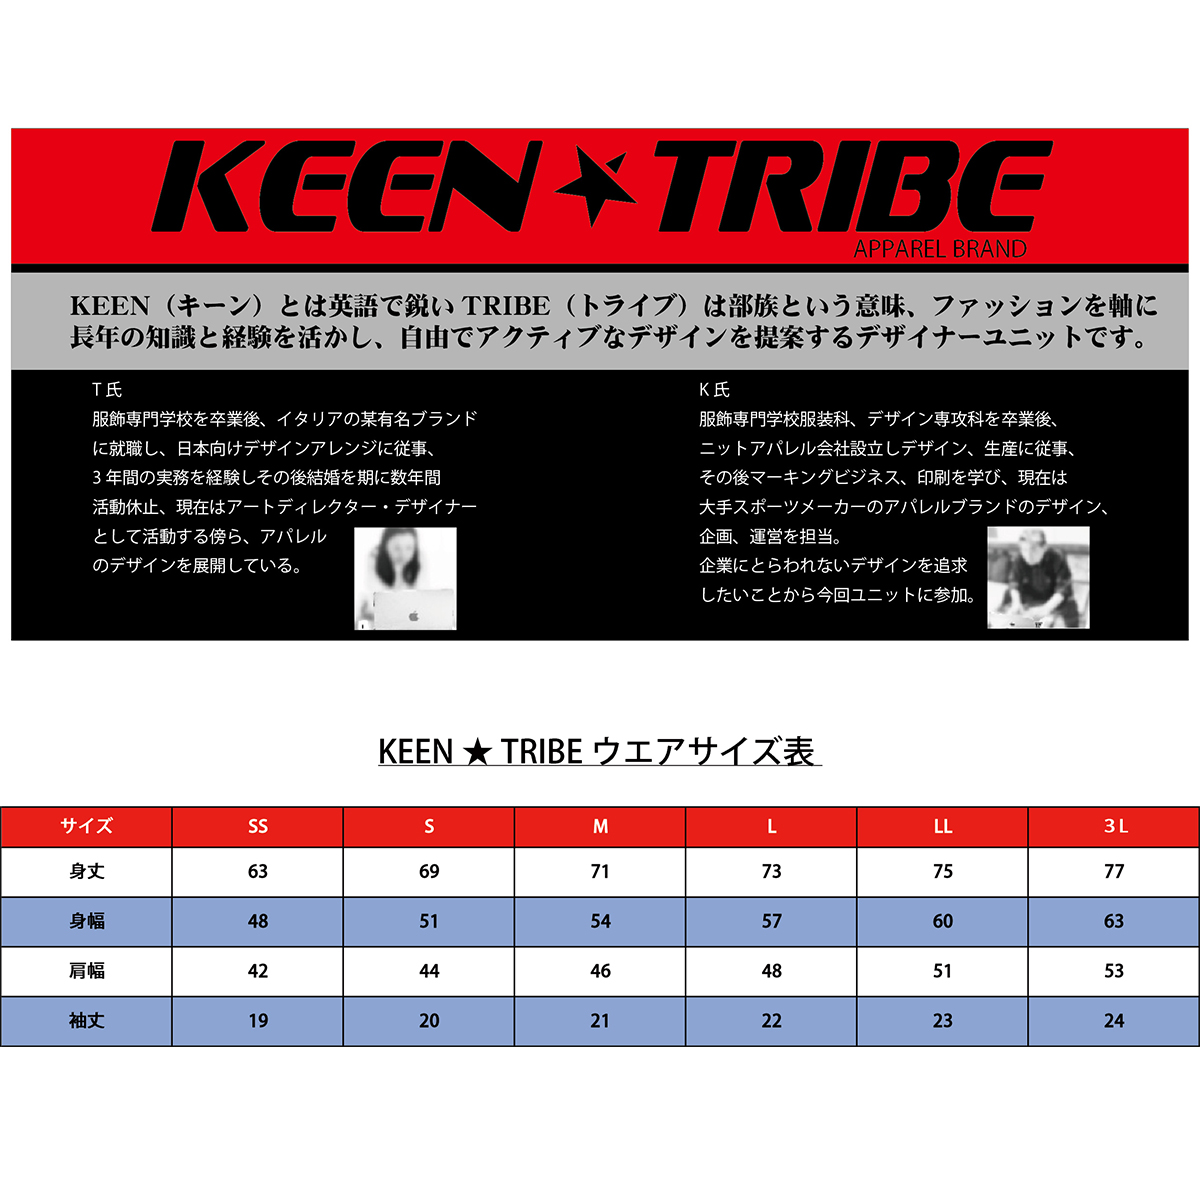 KEEN ★ TRIBE　KT-58(受注生産)【特別価格】